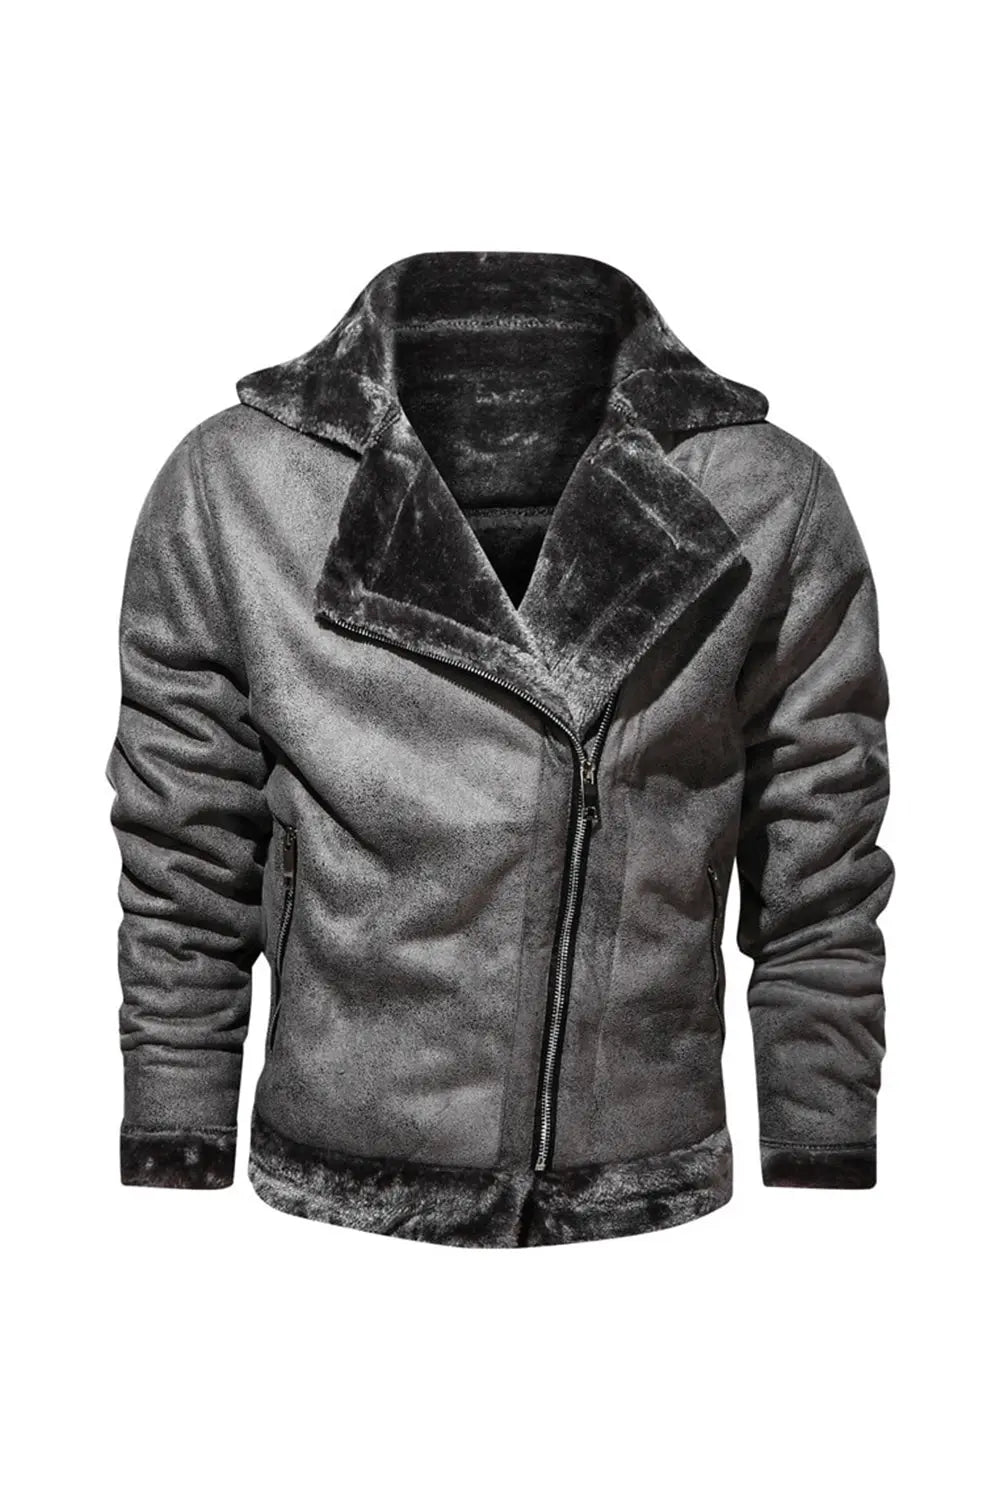 Leather Jacket With Velvet - Grey - Strange Clothes